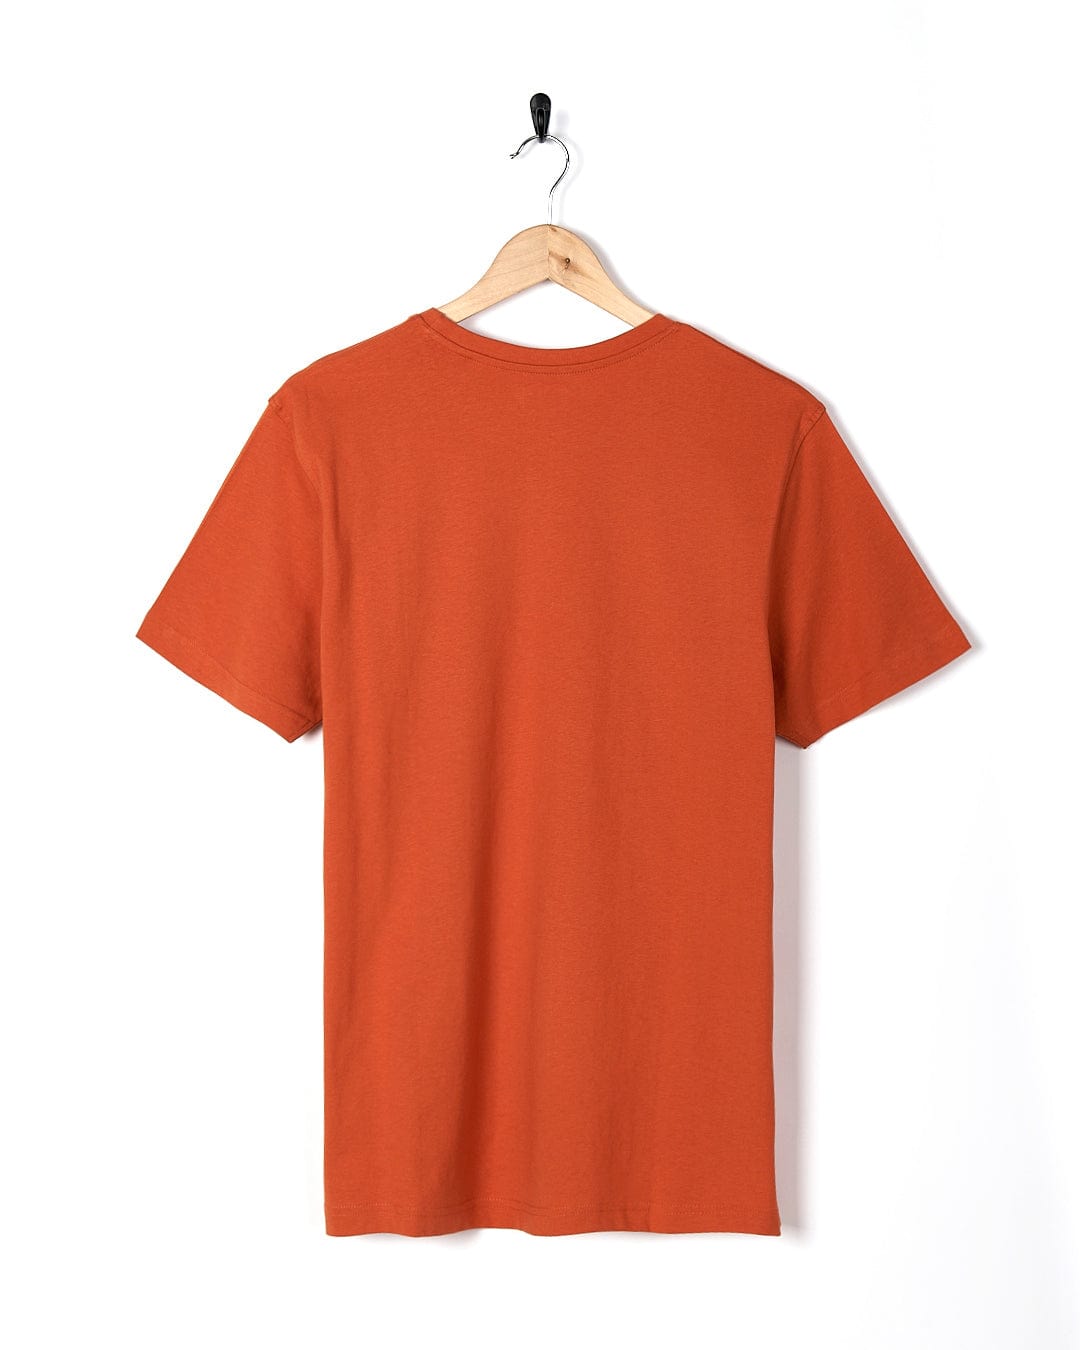 A Saltrock Live Life Location - Mens Short Sleeve T-Shirt - Orange hanging on a hanger.